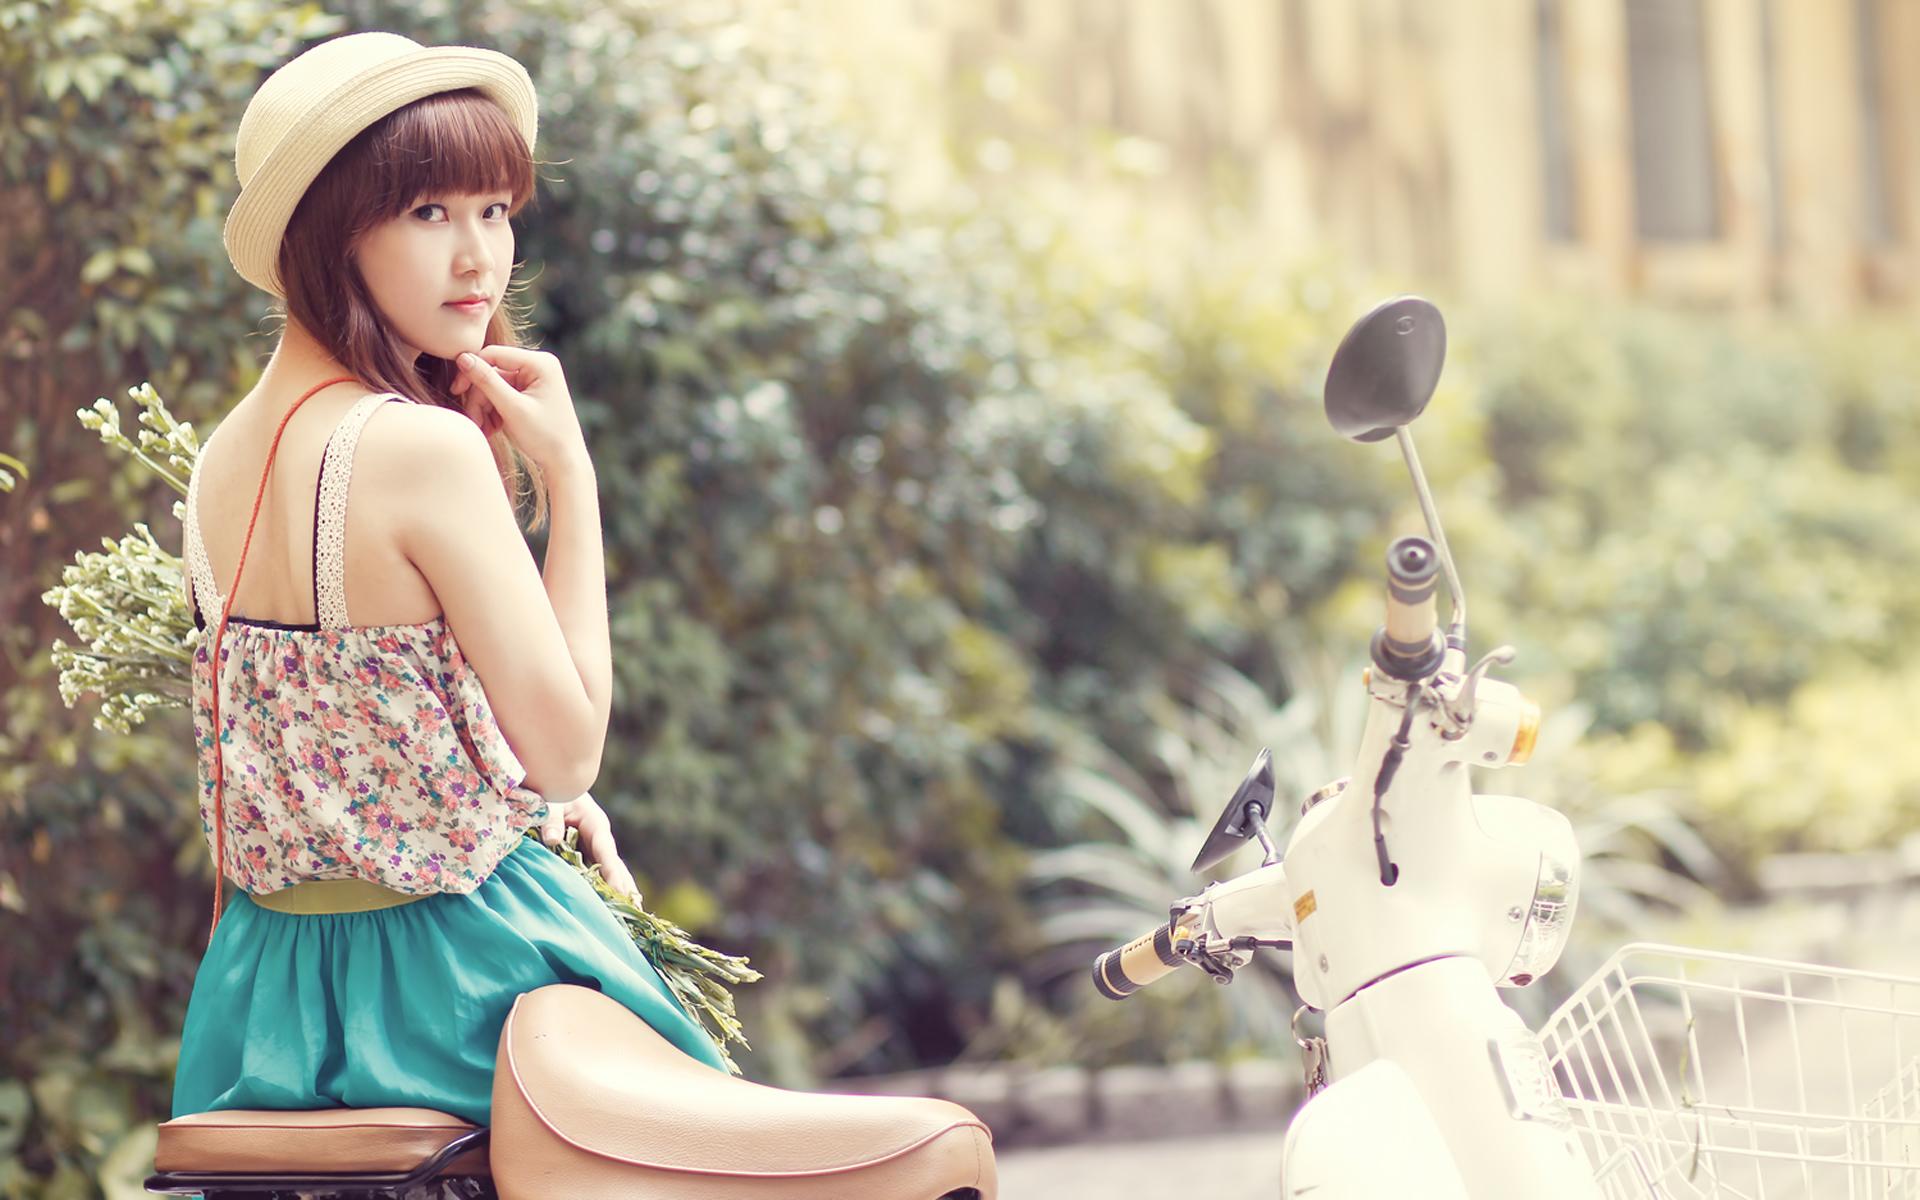 Cute And Beautiful Asian Girls Wallpaper Full HD Free Download